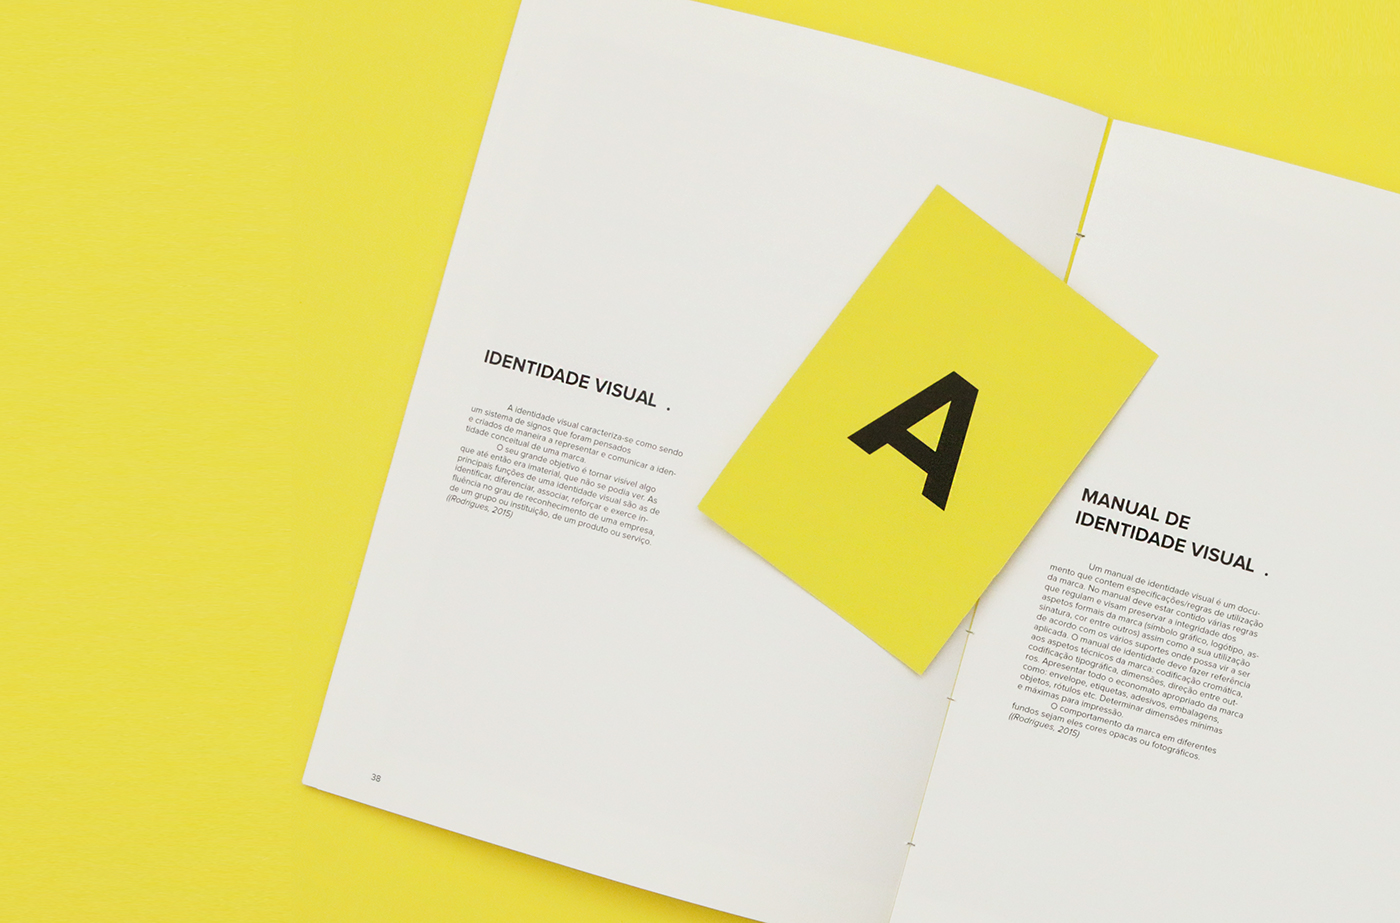 #editorialdesign #editorial #graphicDesign #Design #yellow #yellowandblack #internship #book #report #handcrafted   #handmade